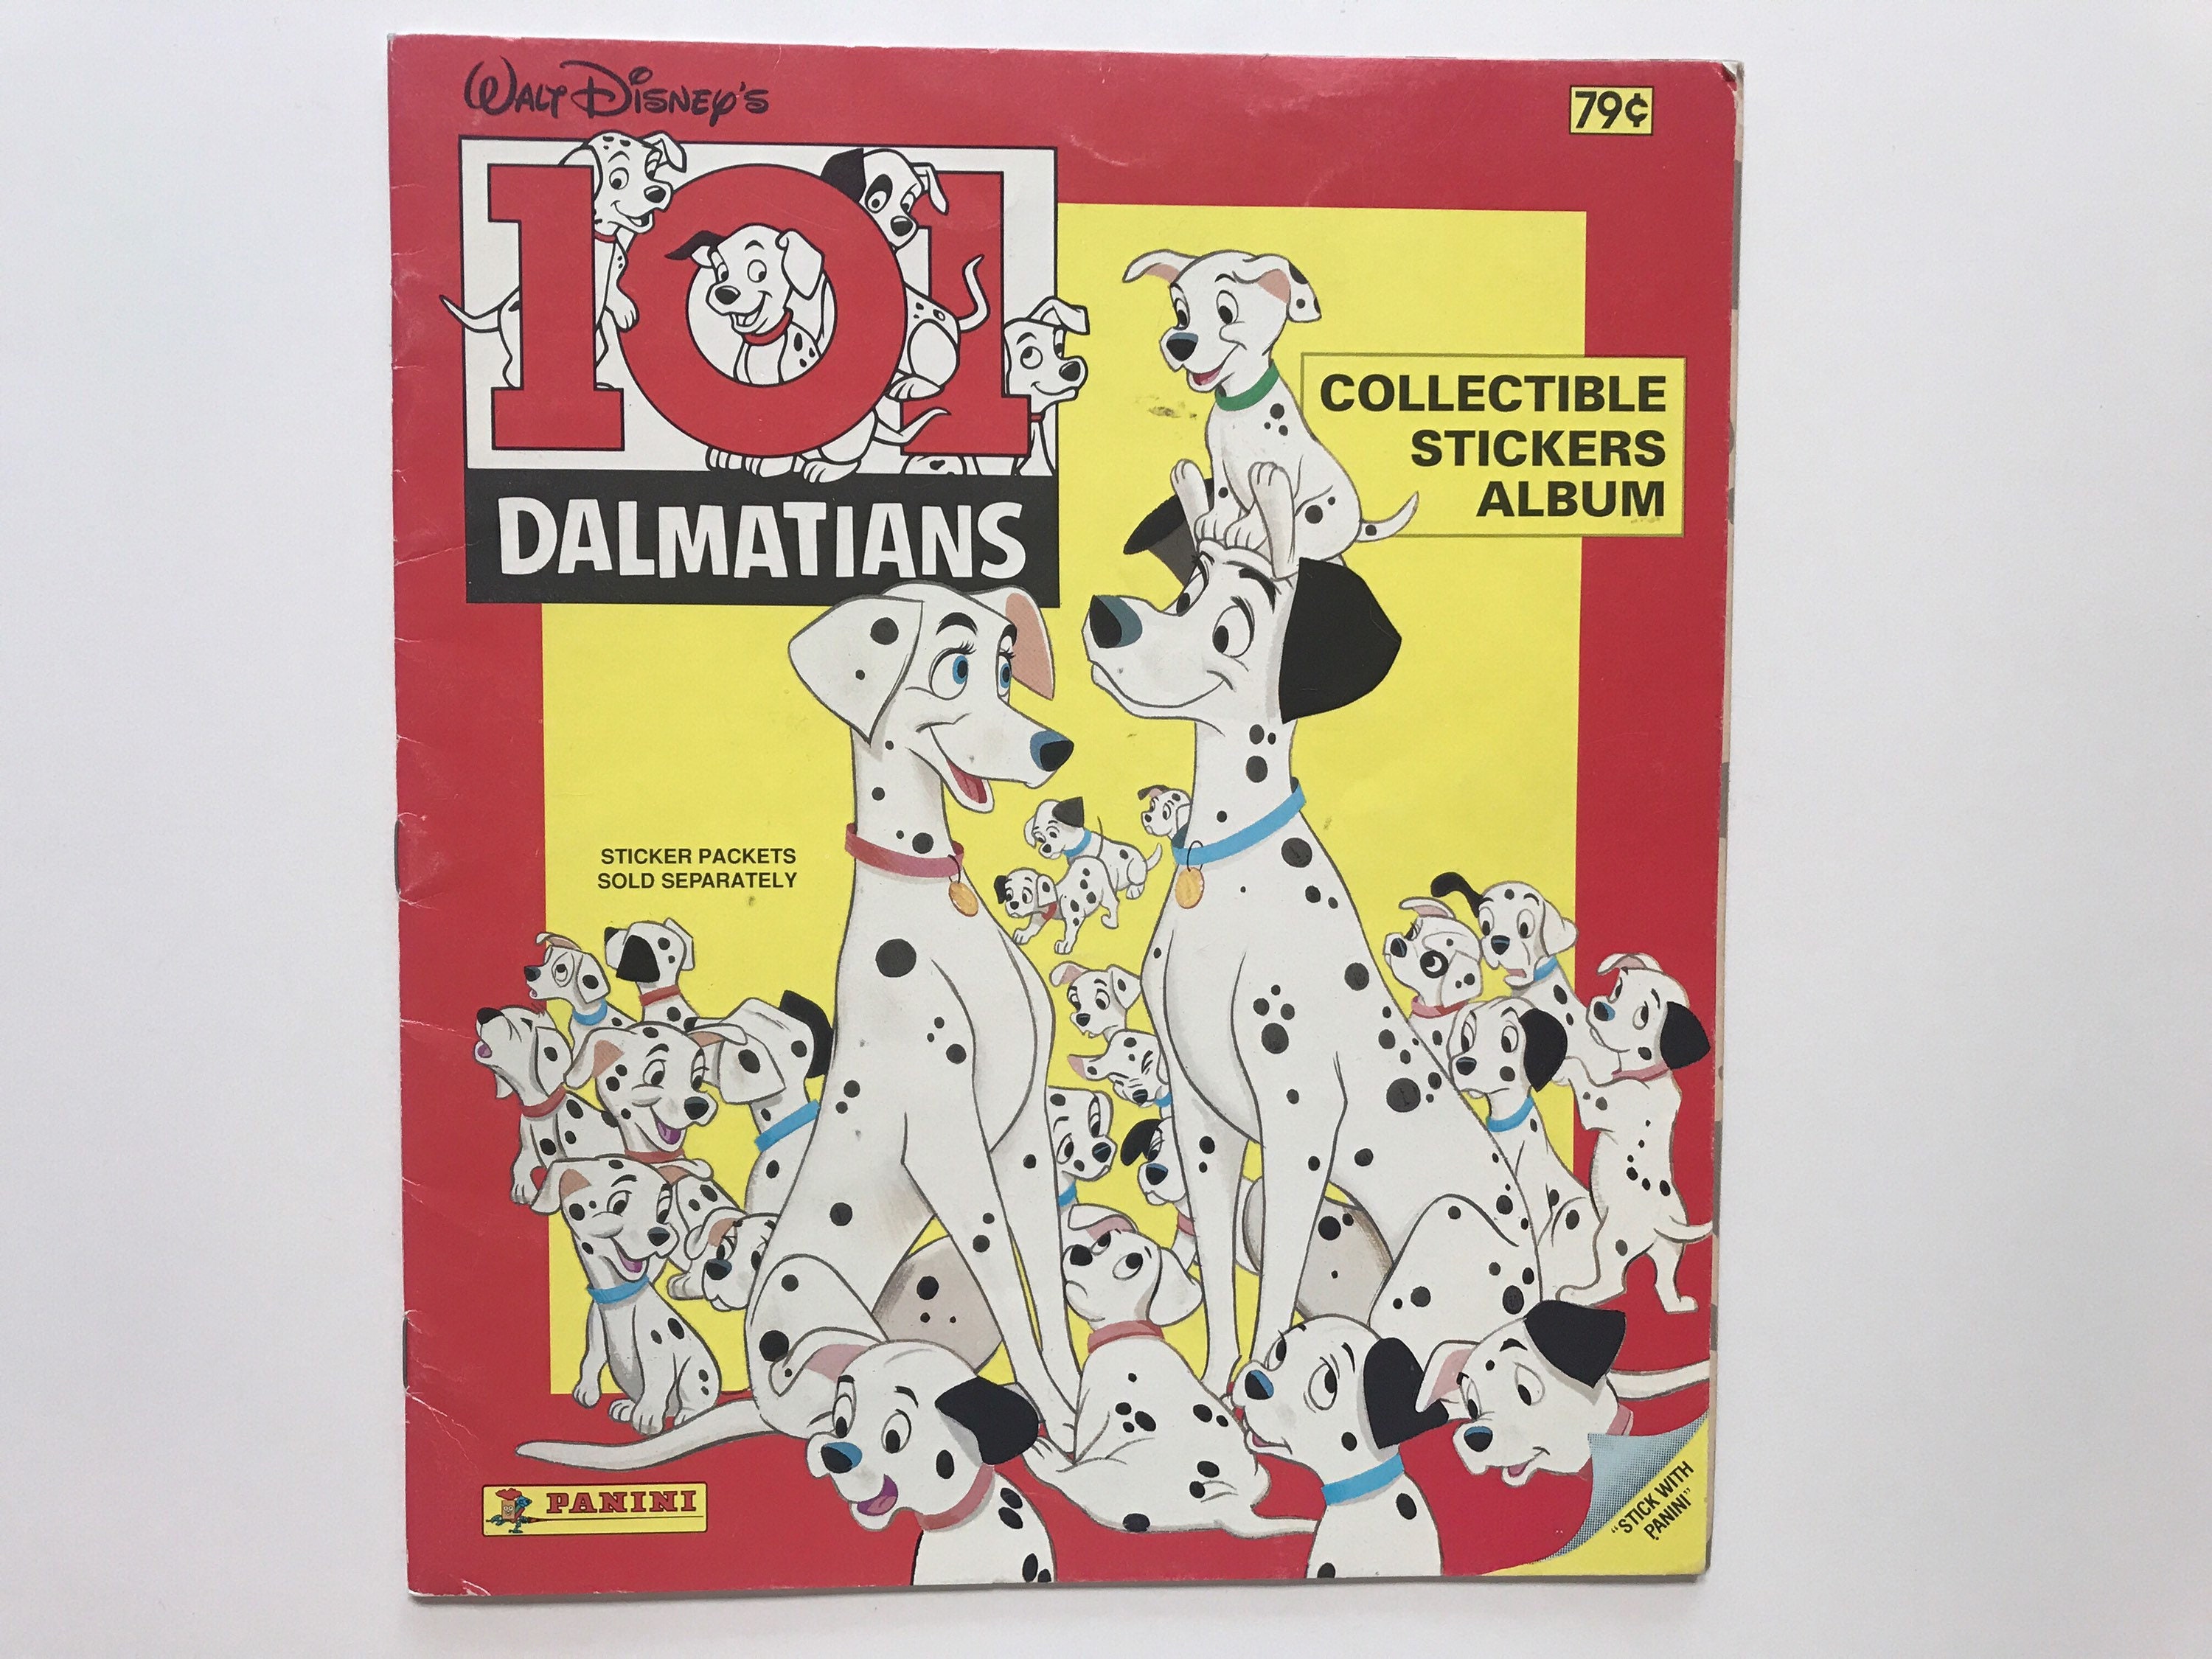 Walt Disney's 101 Dalmatians – Slickcatbooks